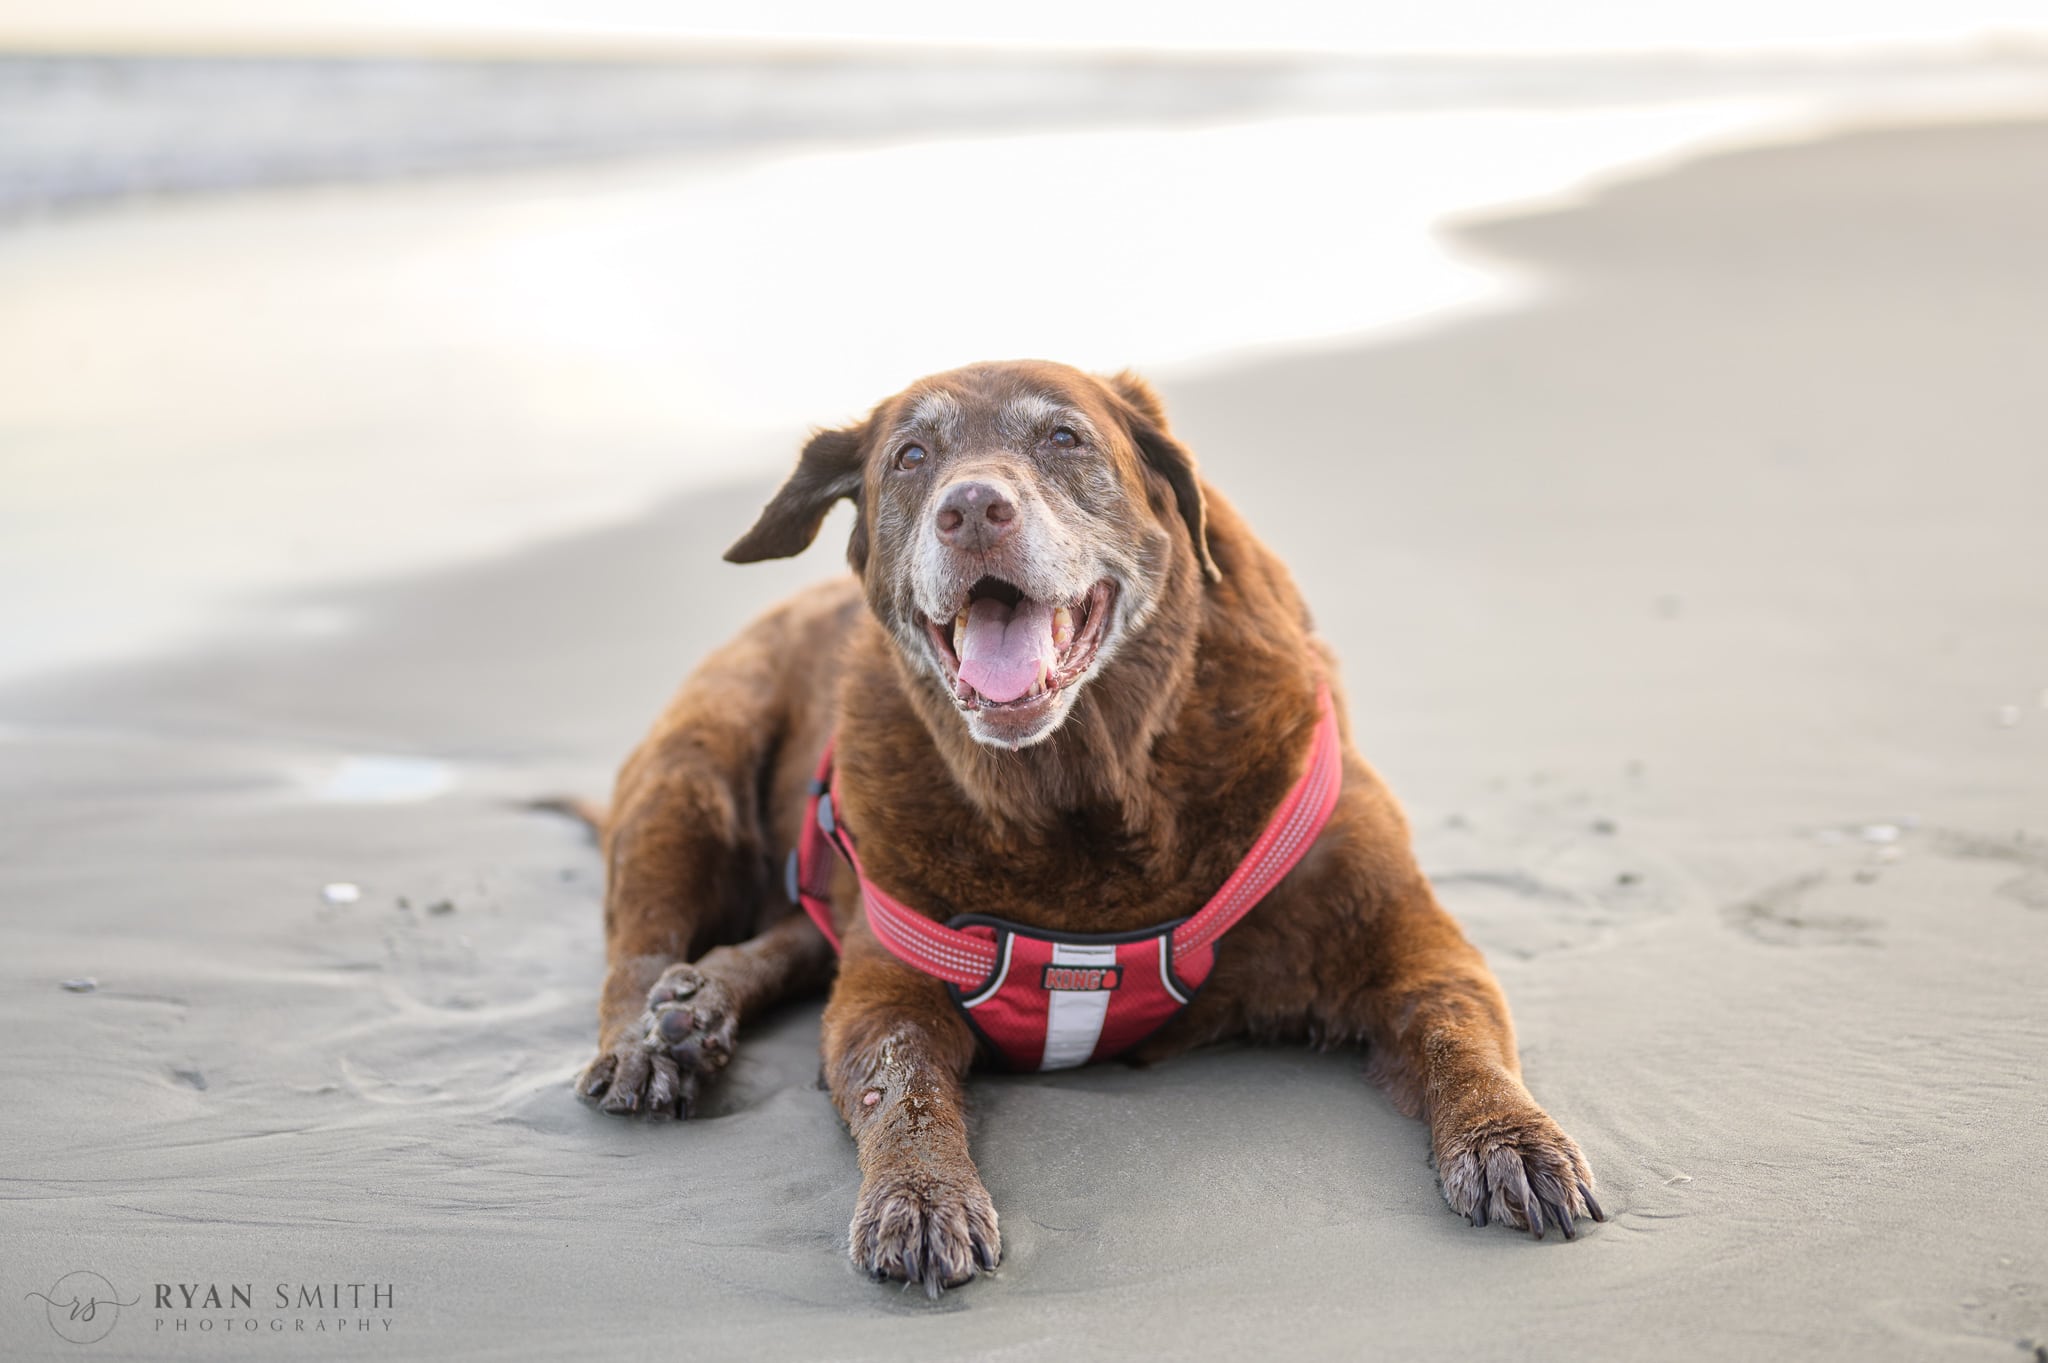 Old dog's last trip to the beach - Cherry Grove